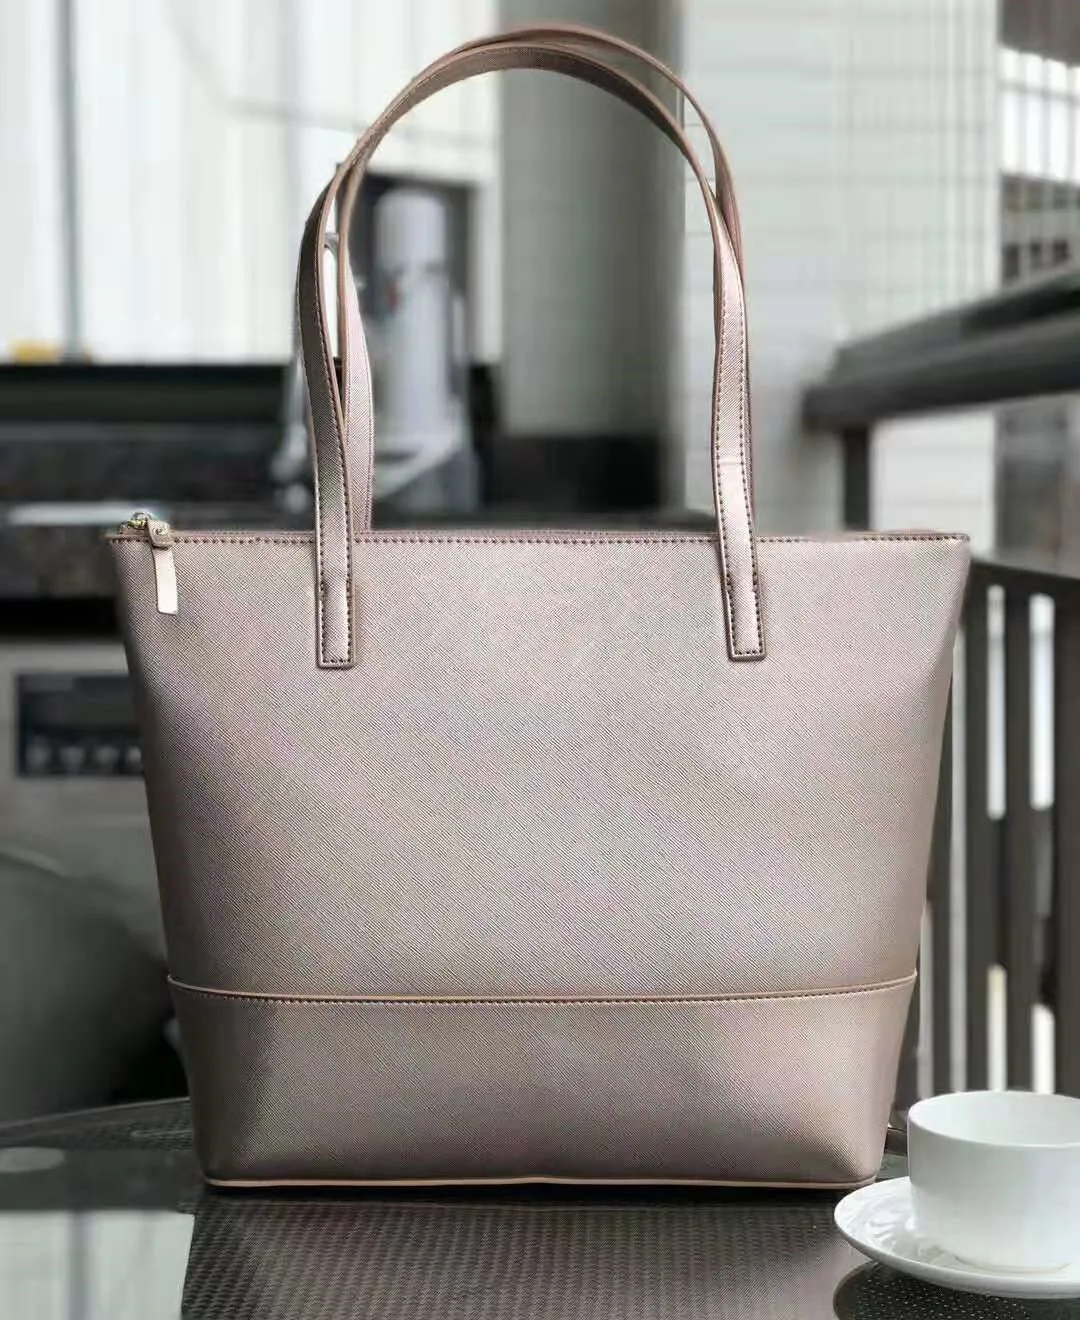 Popular fashion European and American simple horizontal style large shopping bag shoulder bag women handbag casual bag - Цвет: rose gold